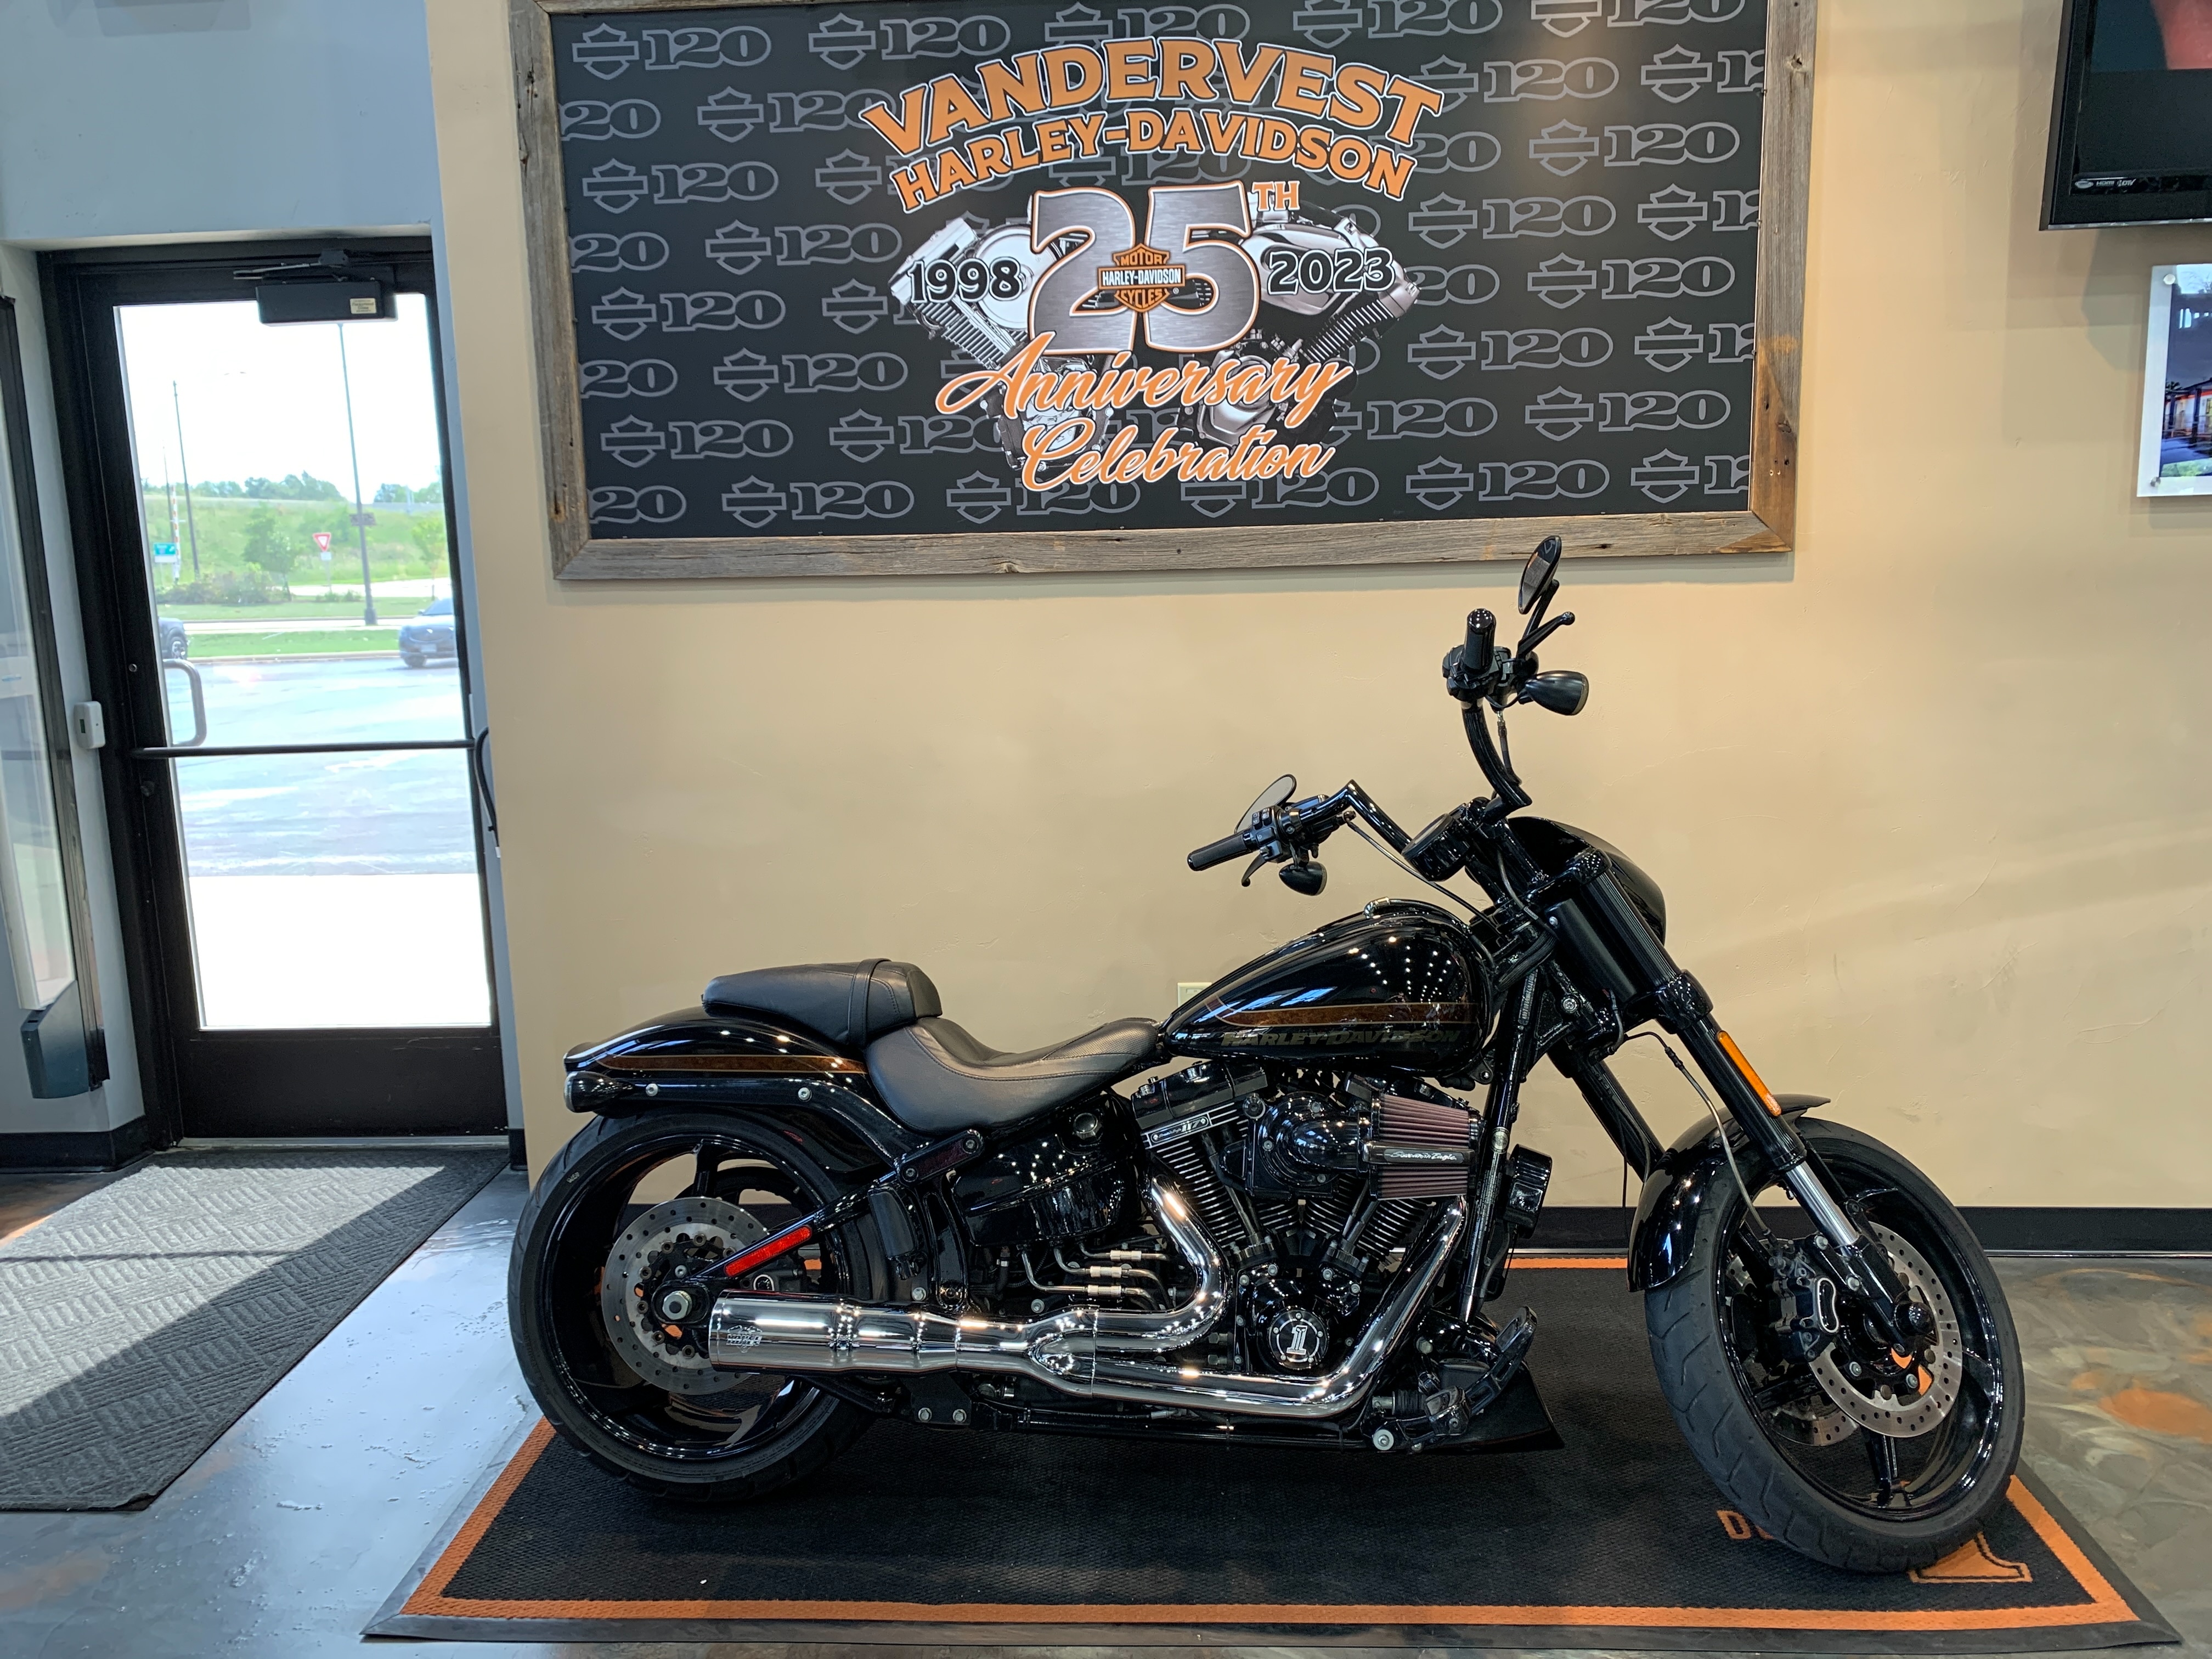 2017 Harley-Davidson Softail CVO Pro Street Breakout at Vandervest Harley-Davidson, Green Bay, WI 54303